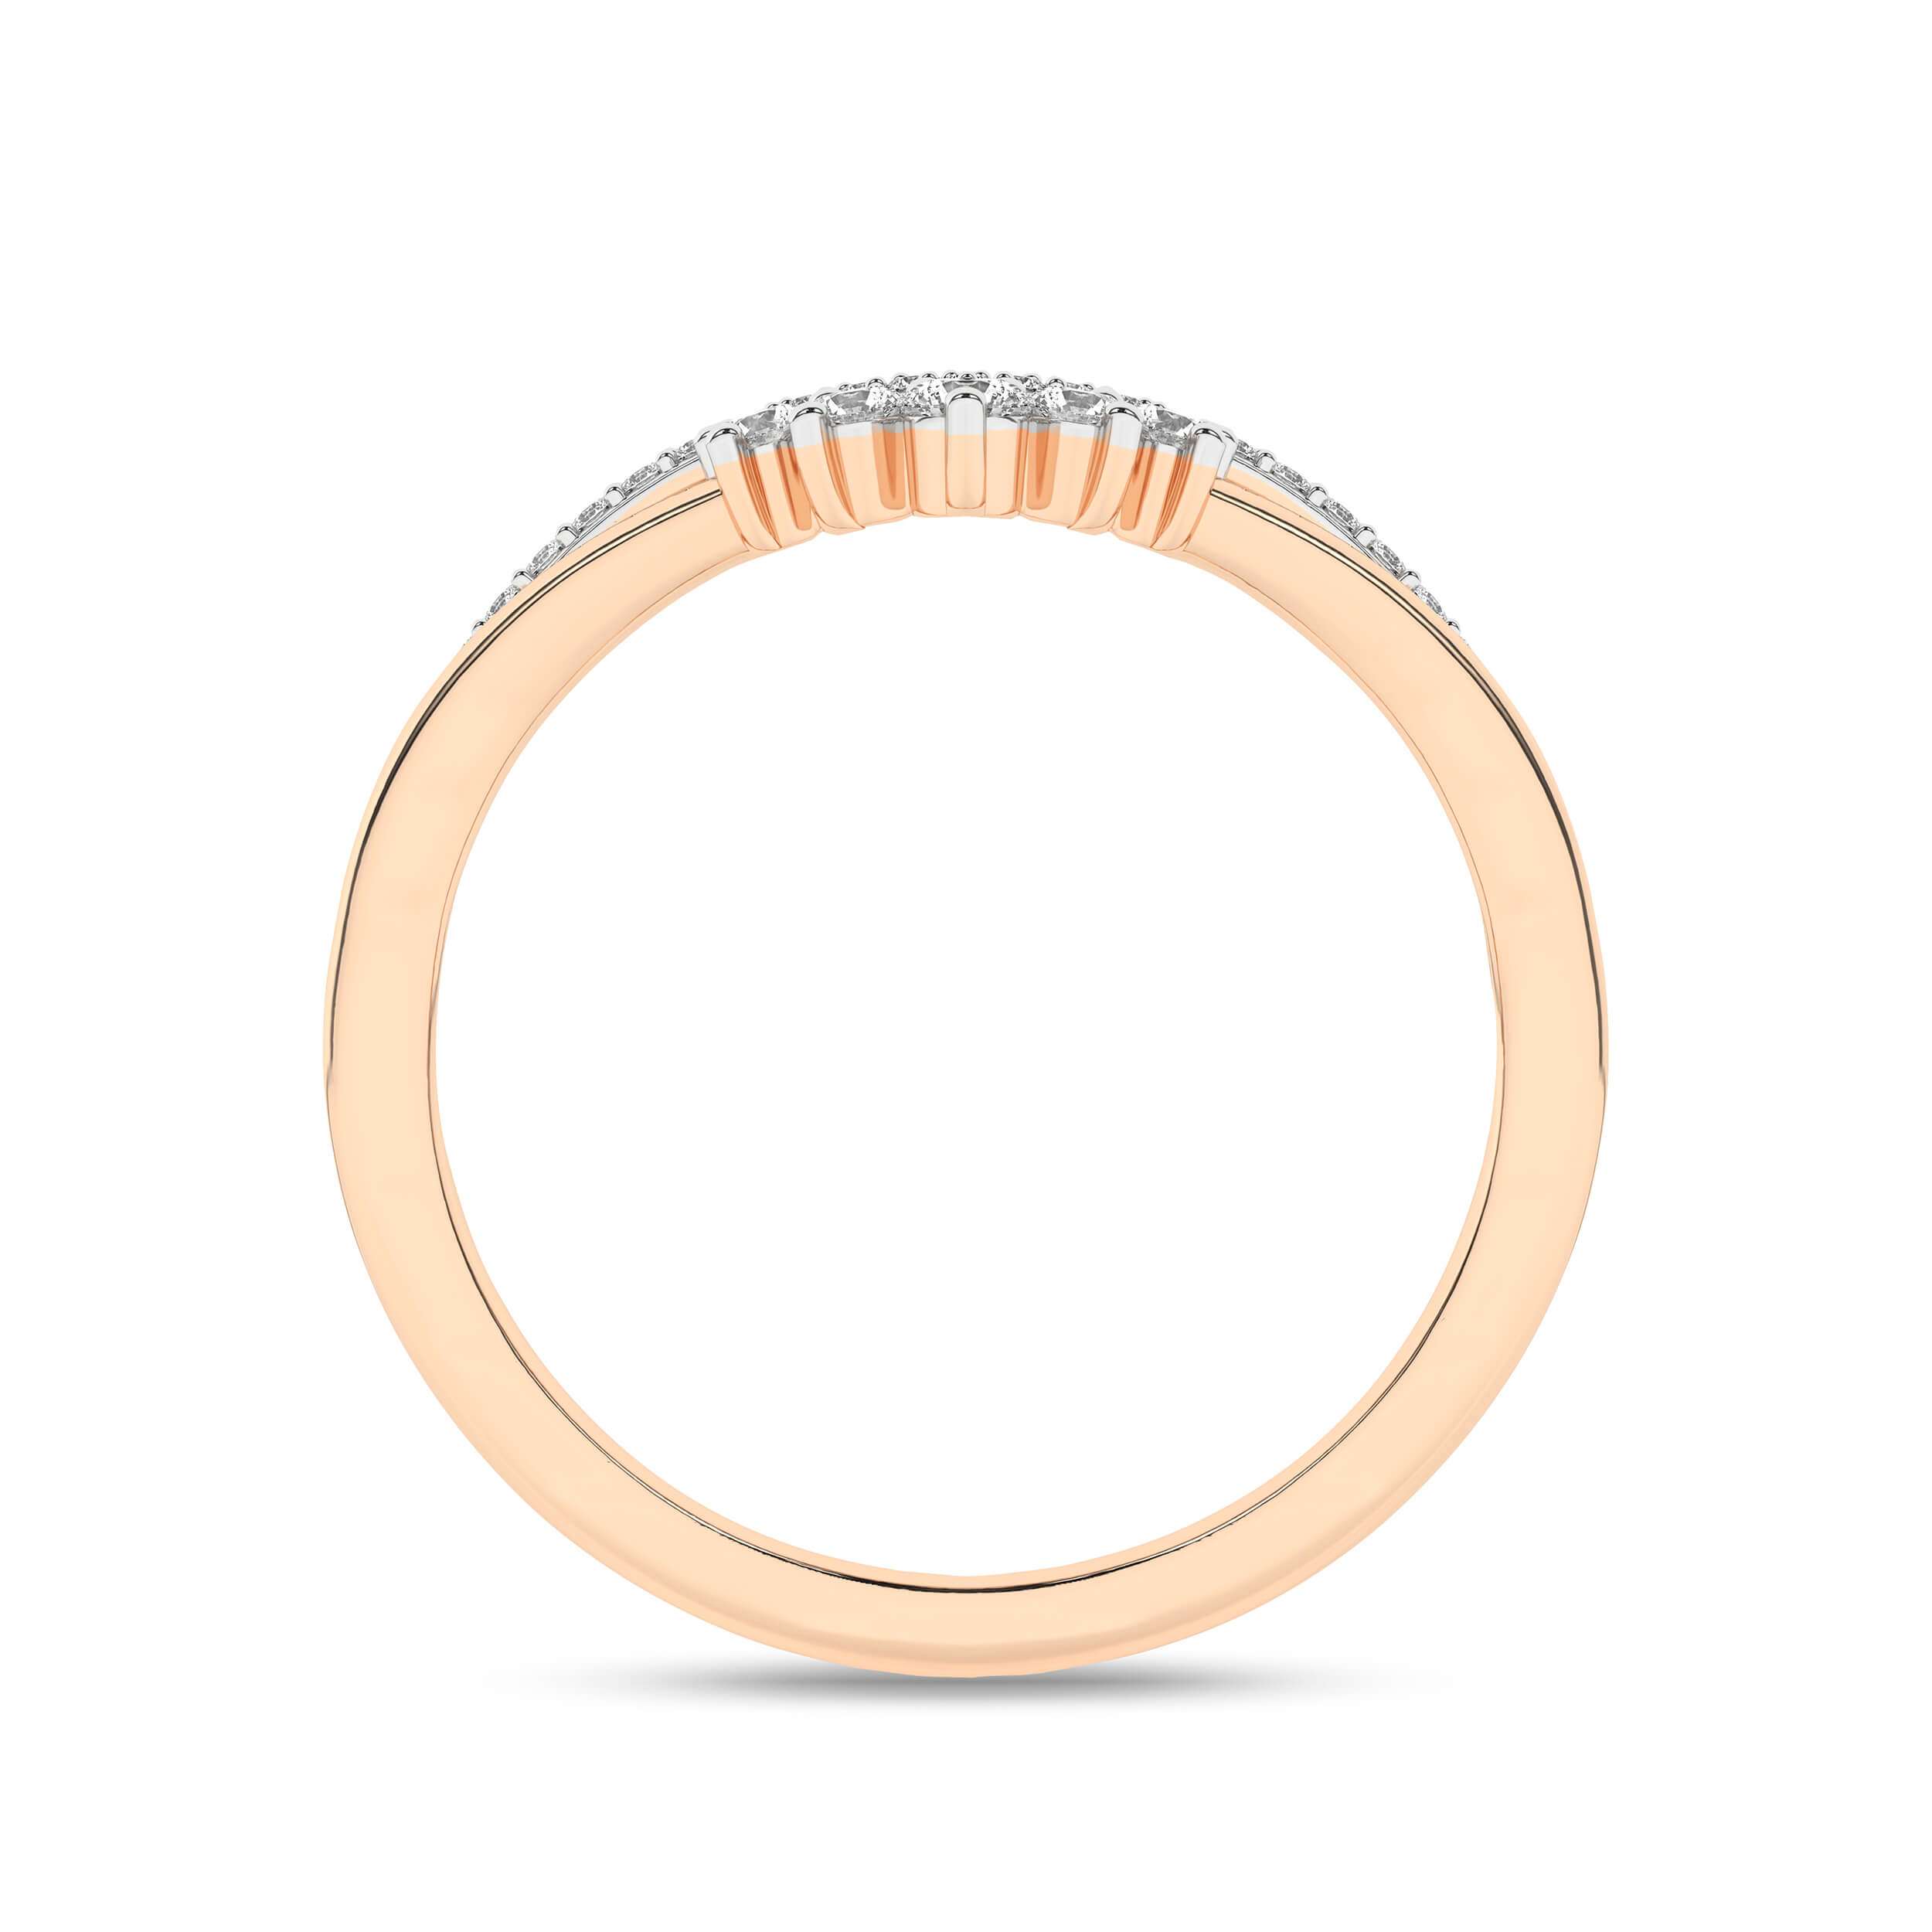 Inel din Aur Roz 14K cu Diamante, articol RF16788, previzualizare foto 2